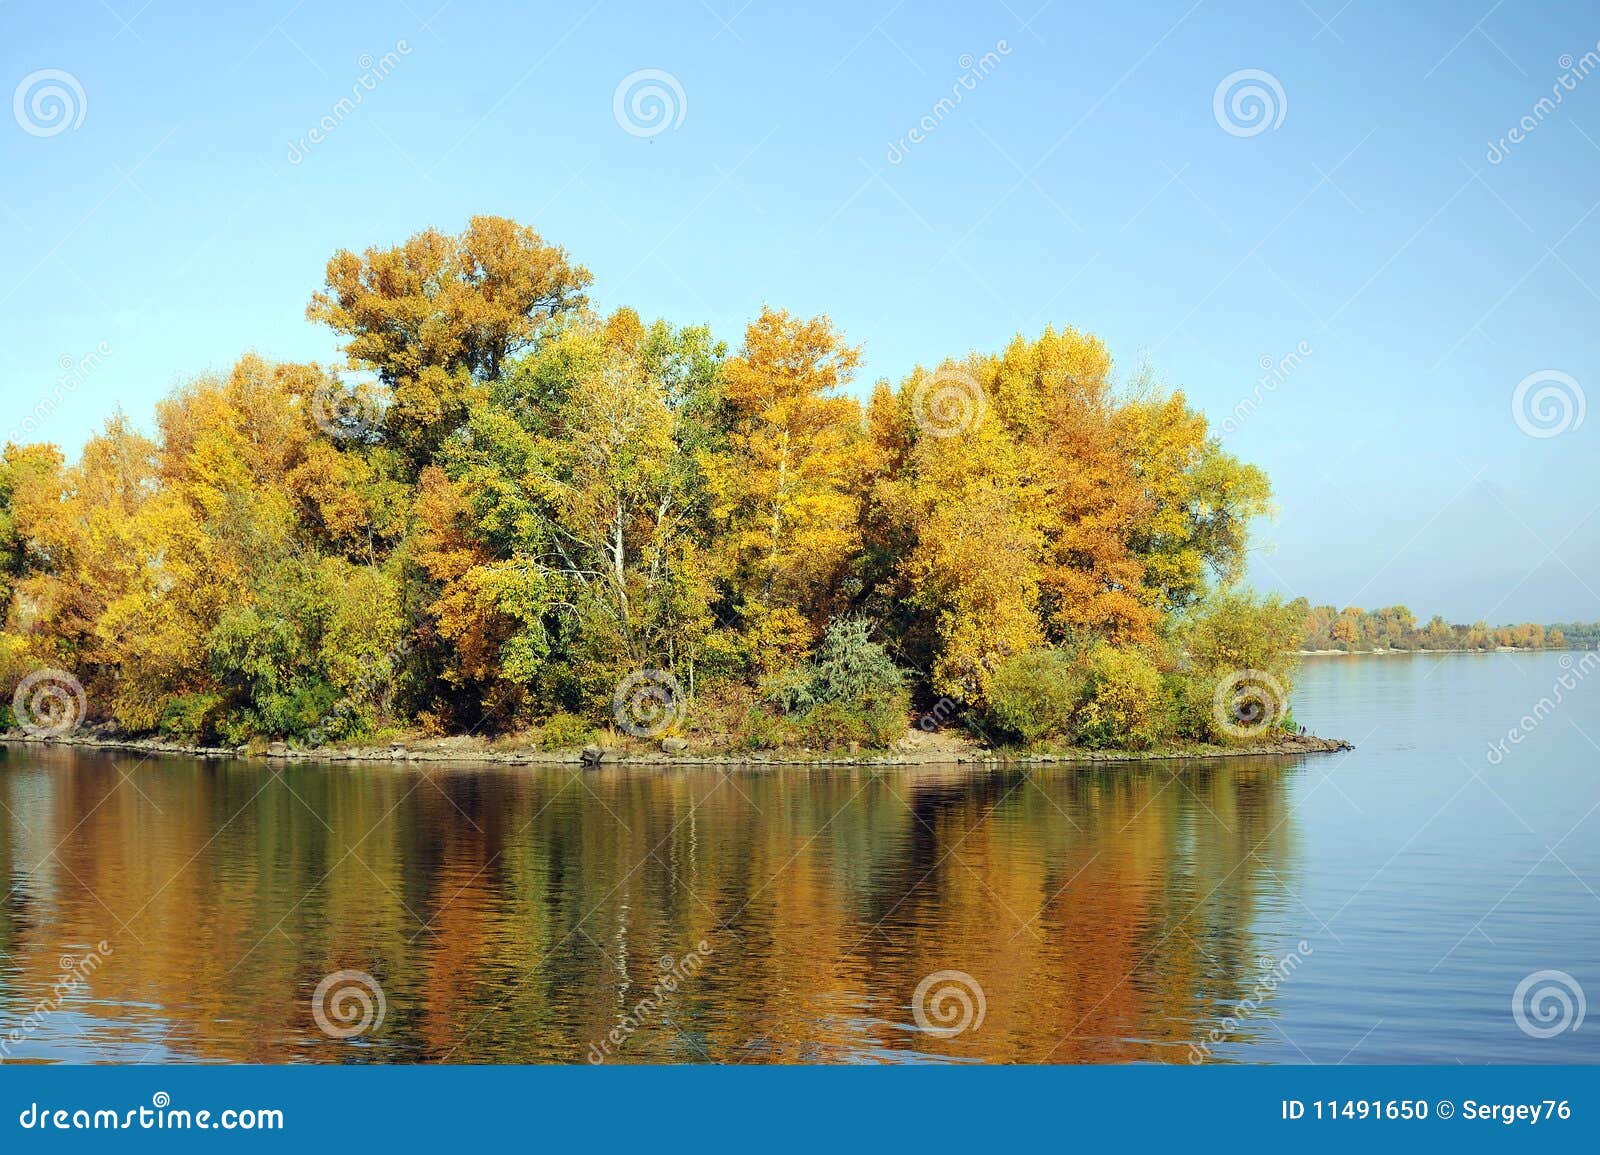 island-with-trees-stock-photo-image-of-beach-island-11491650